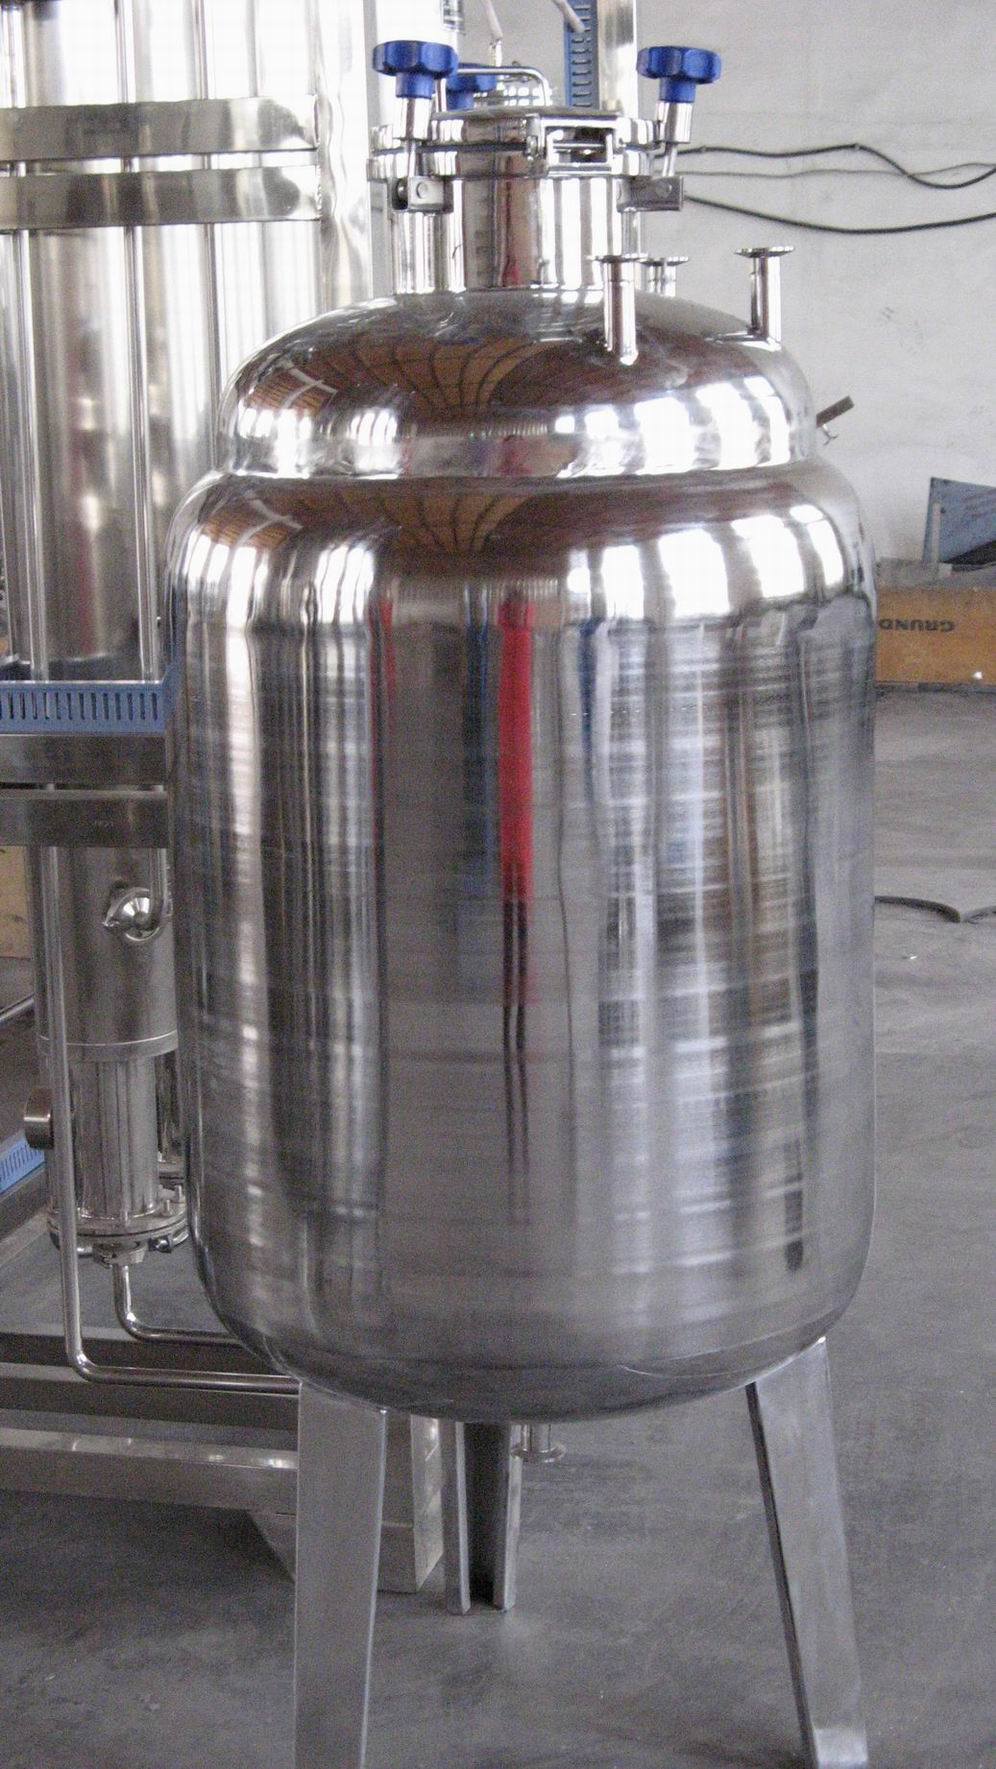 WFI Stainless Steel Distilled Water Storage Tank